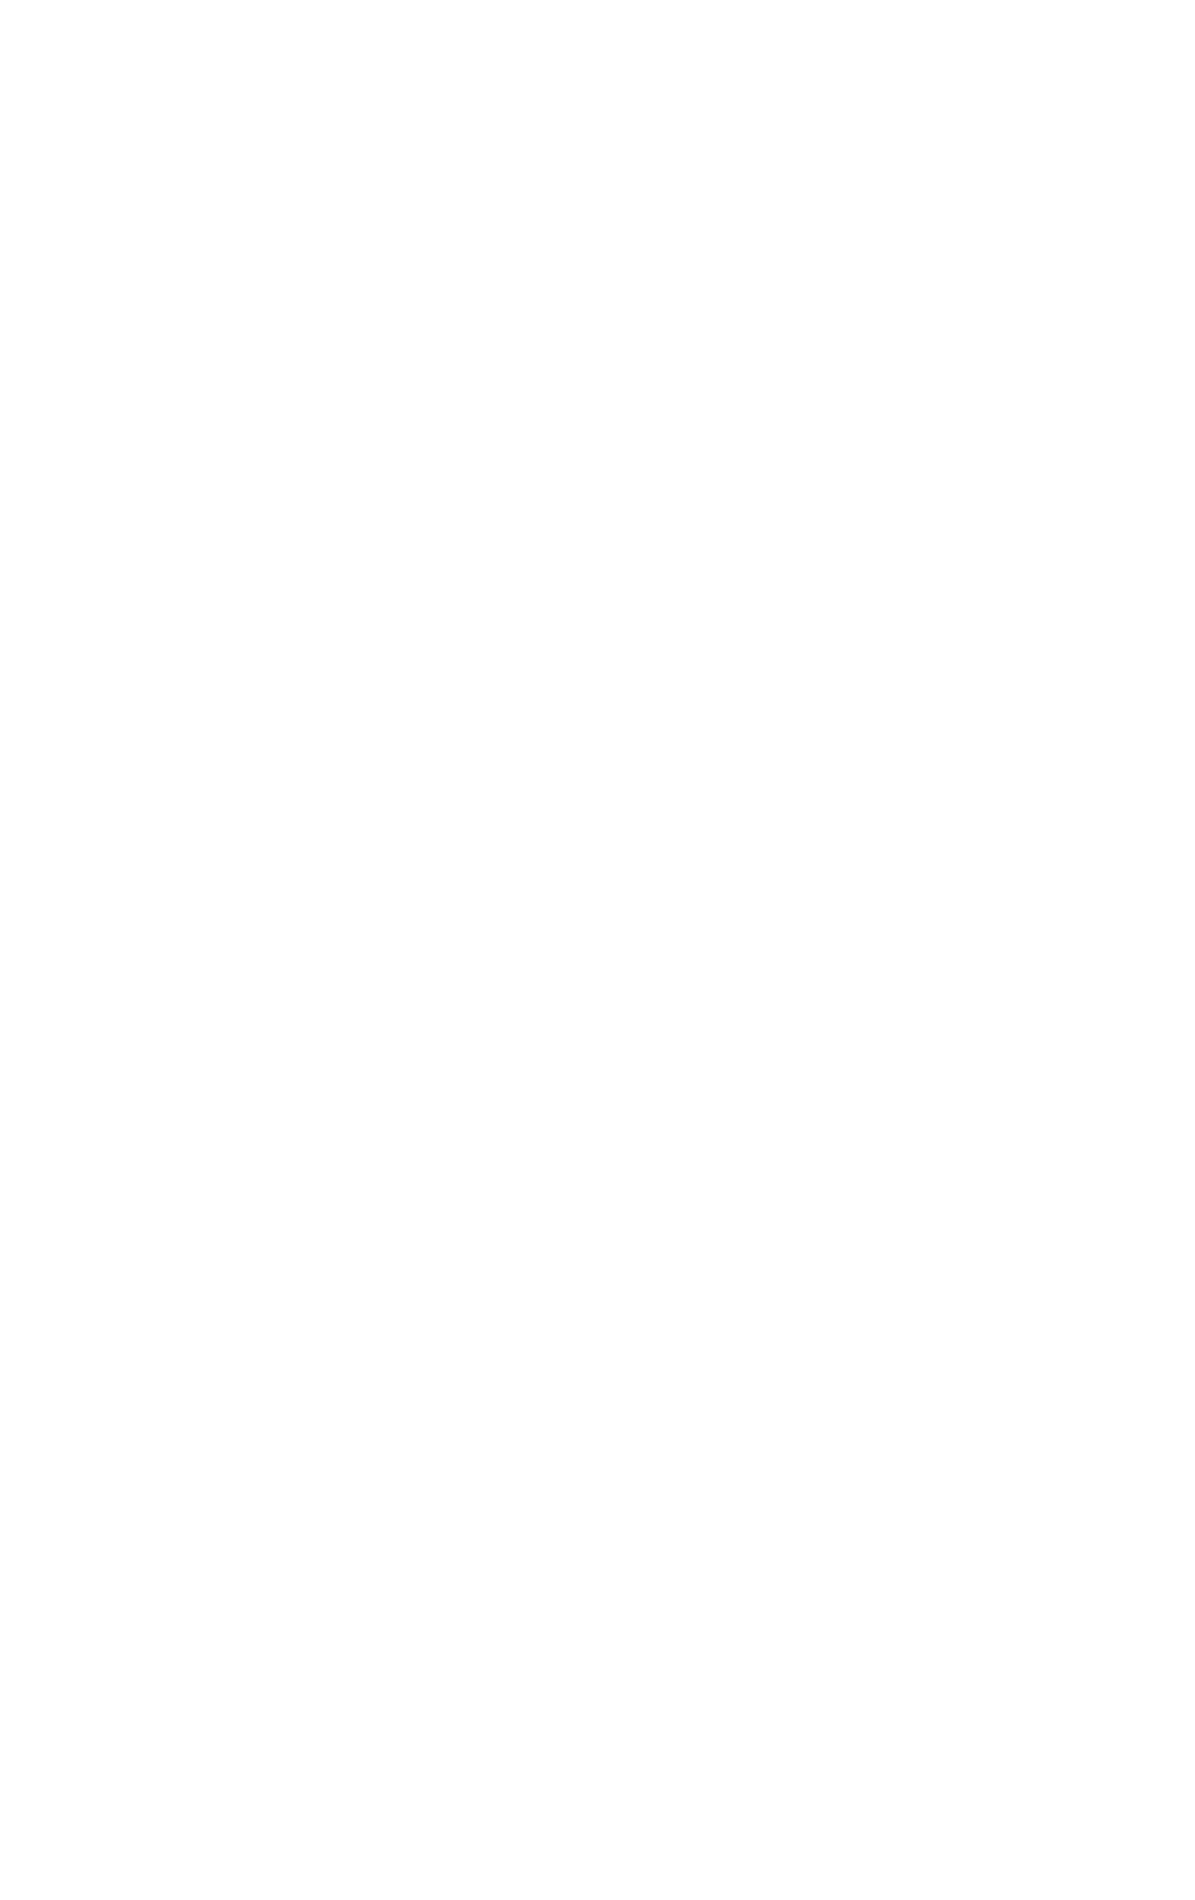 Interactive pivot table